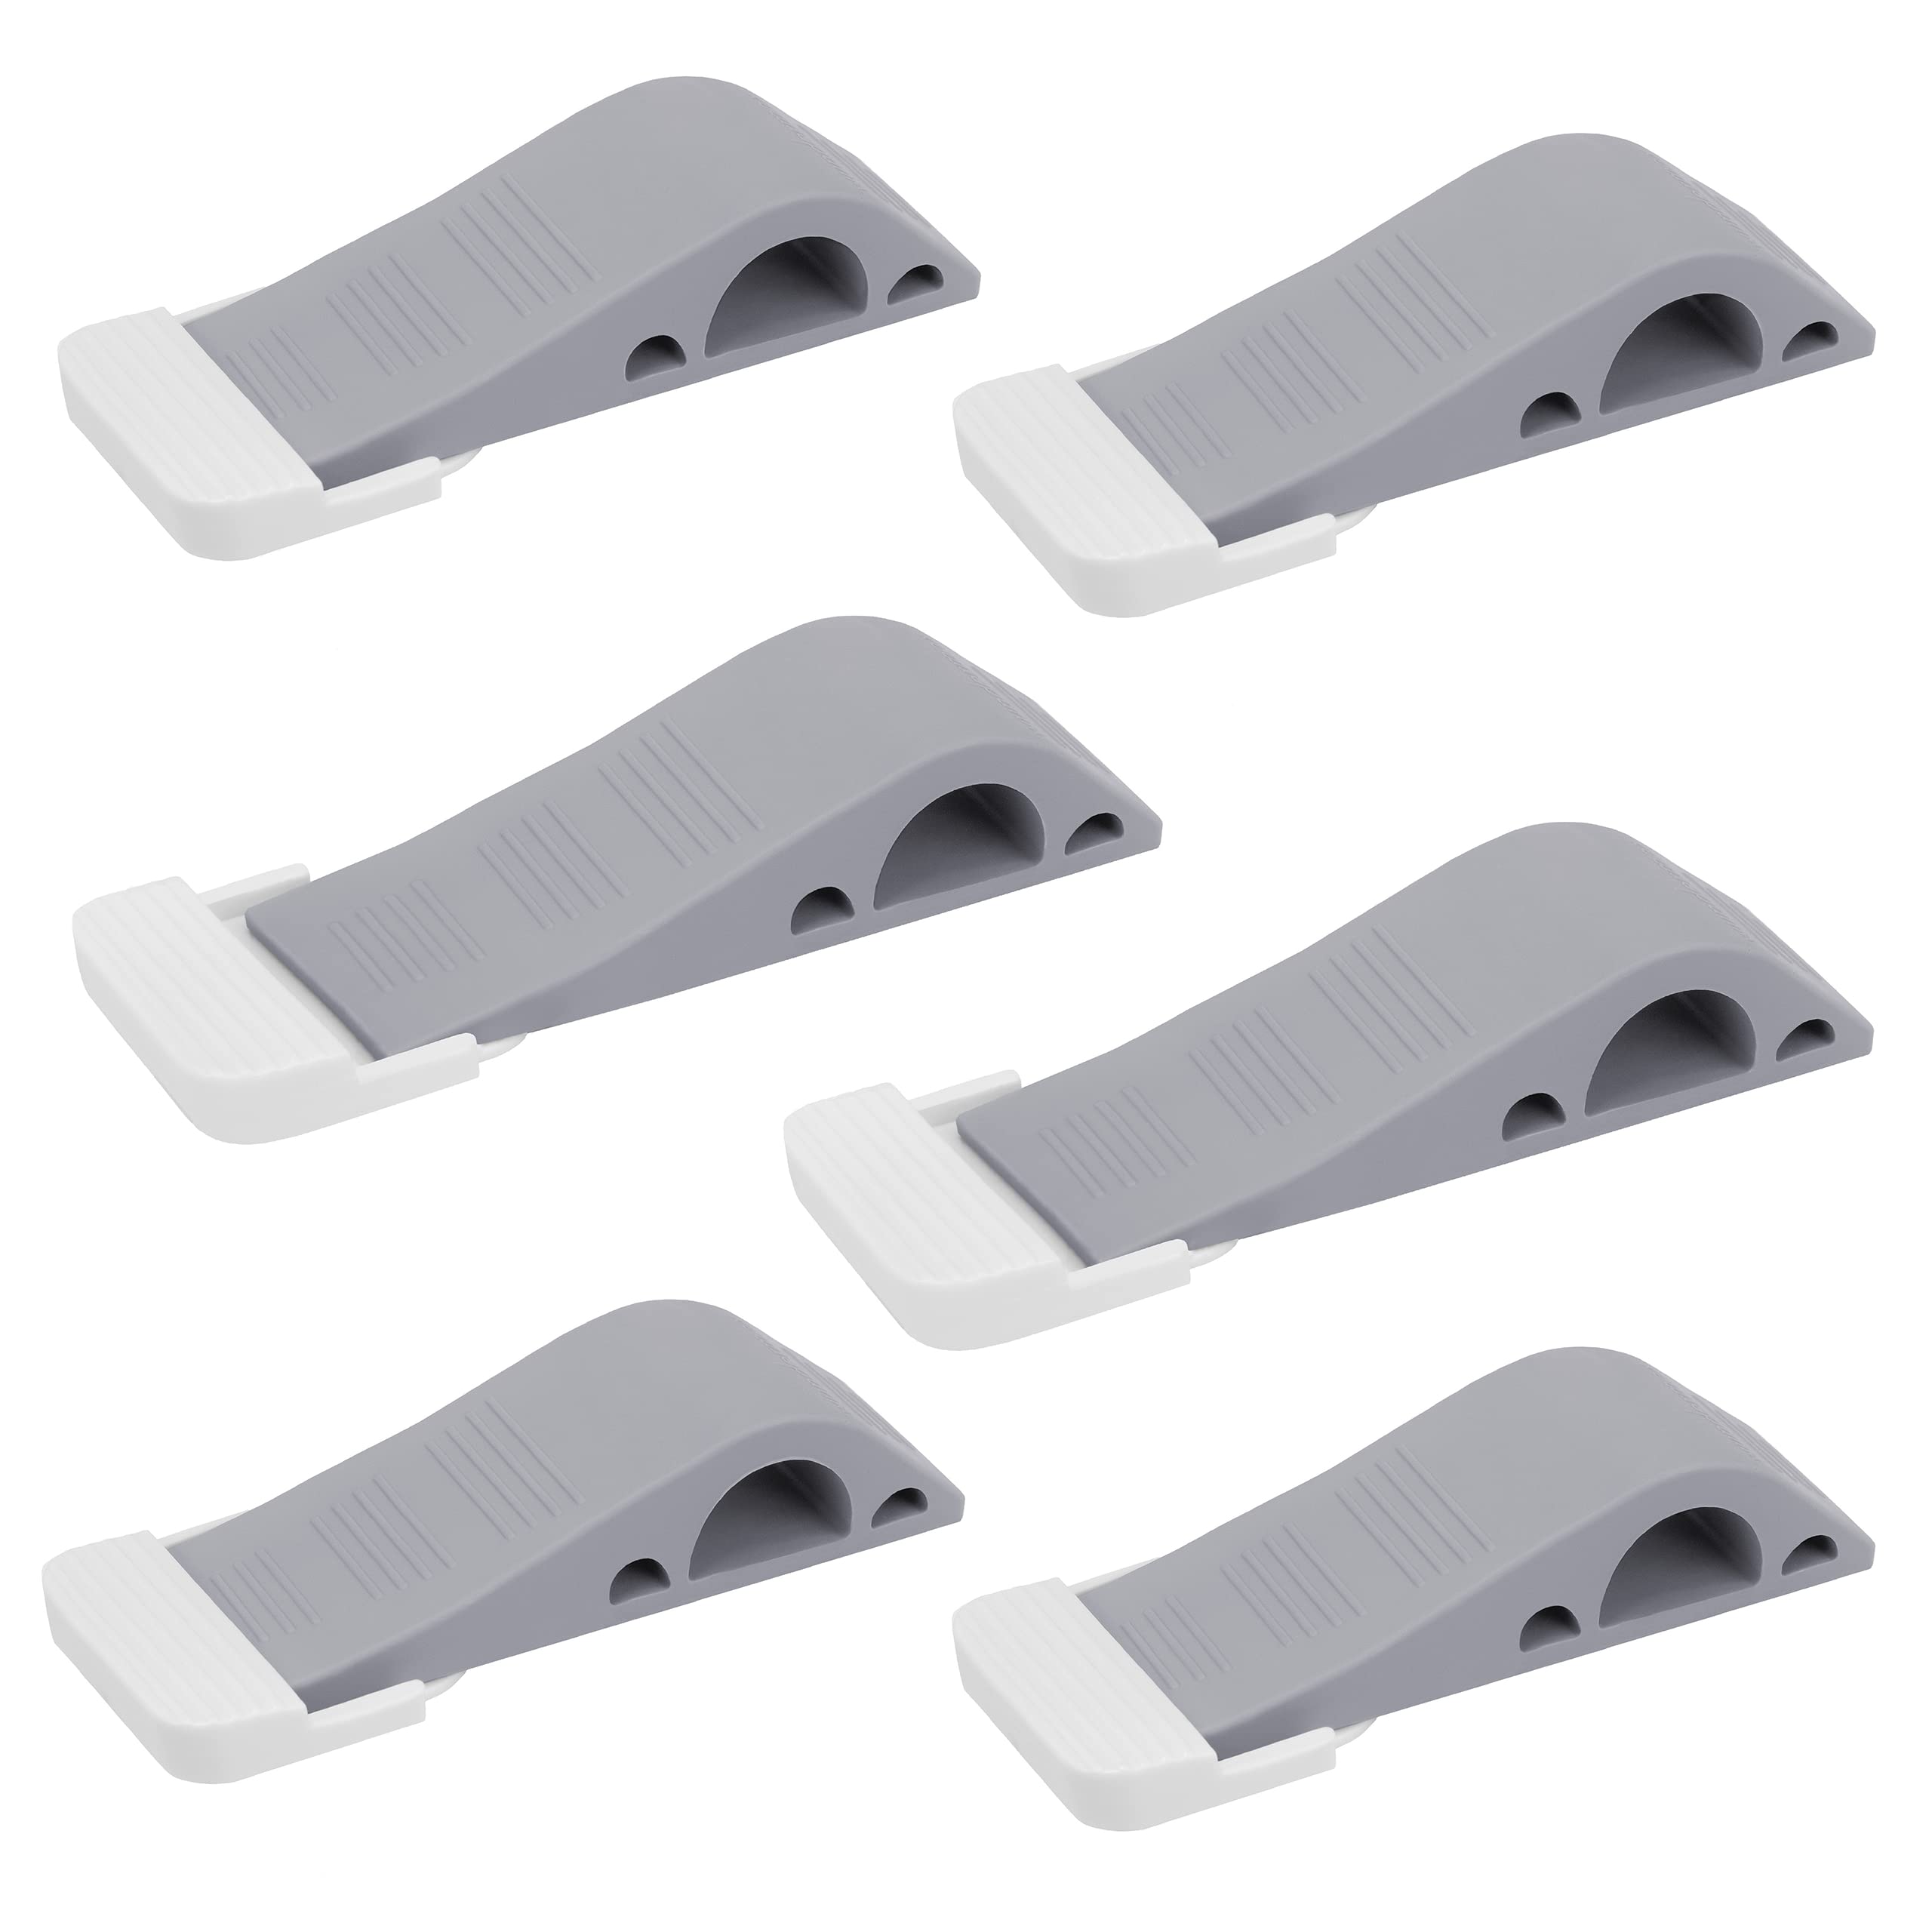 Wundermax Door Stoppers - Pack of 6 Rubber Door Wedge for carpet, Hardwood, concrete and Tile - Home Improvement Accessories - gray